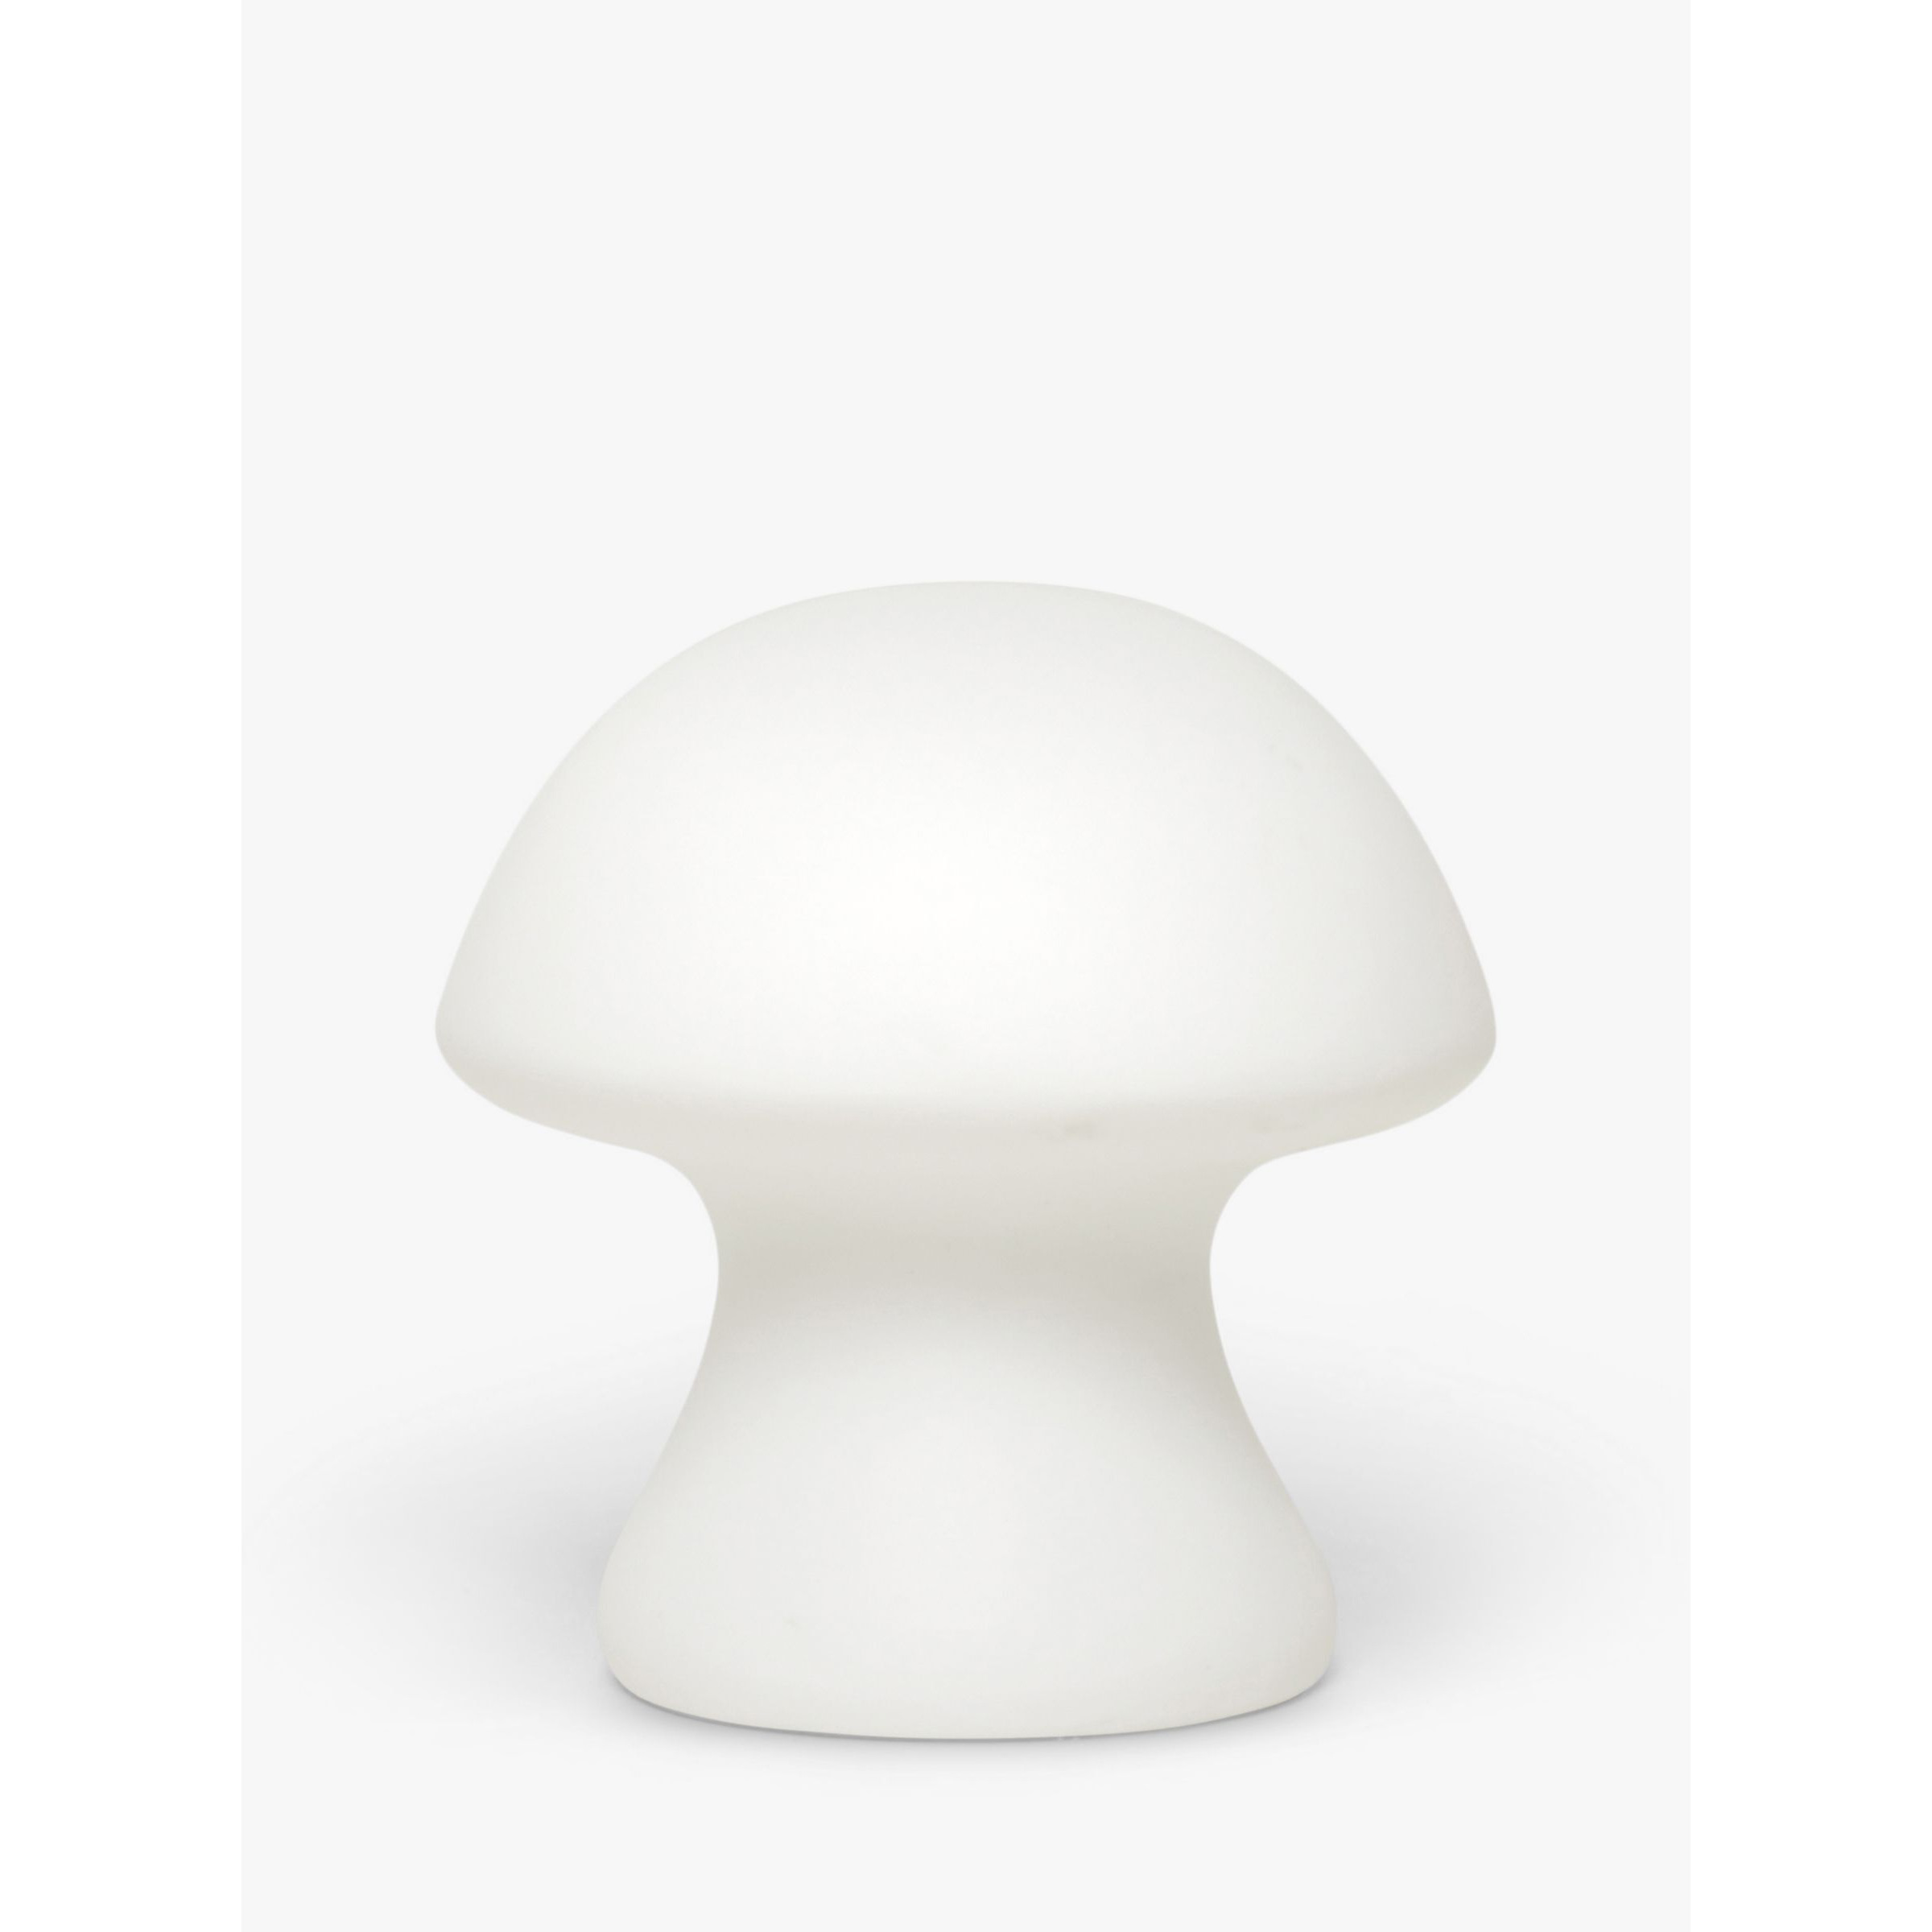 Kikkerland Small Cordless Mushroom Table Light, White - image 1